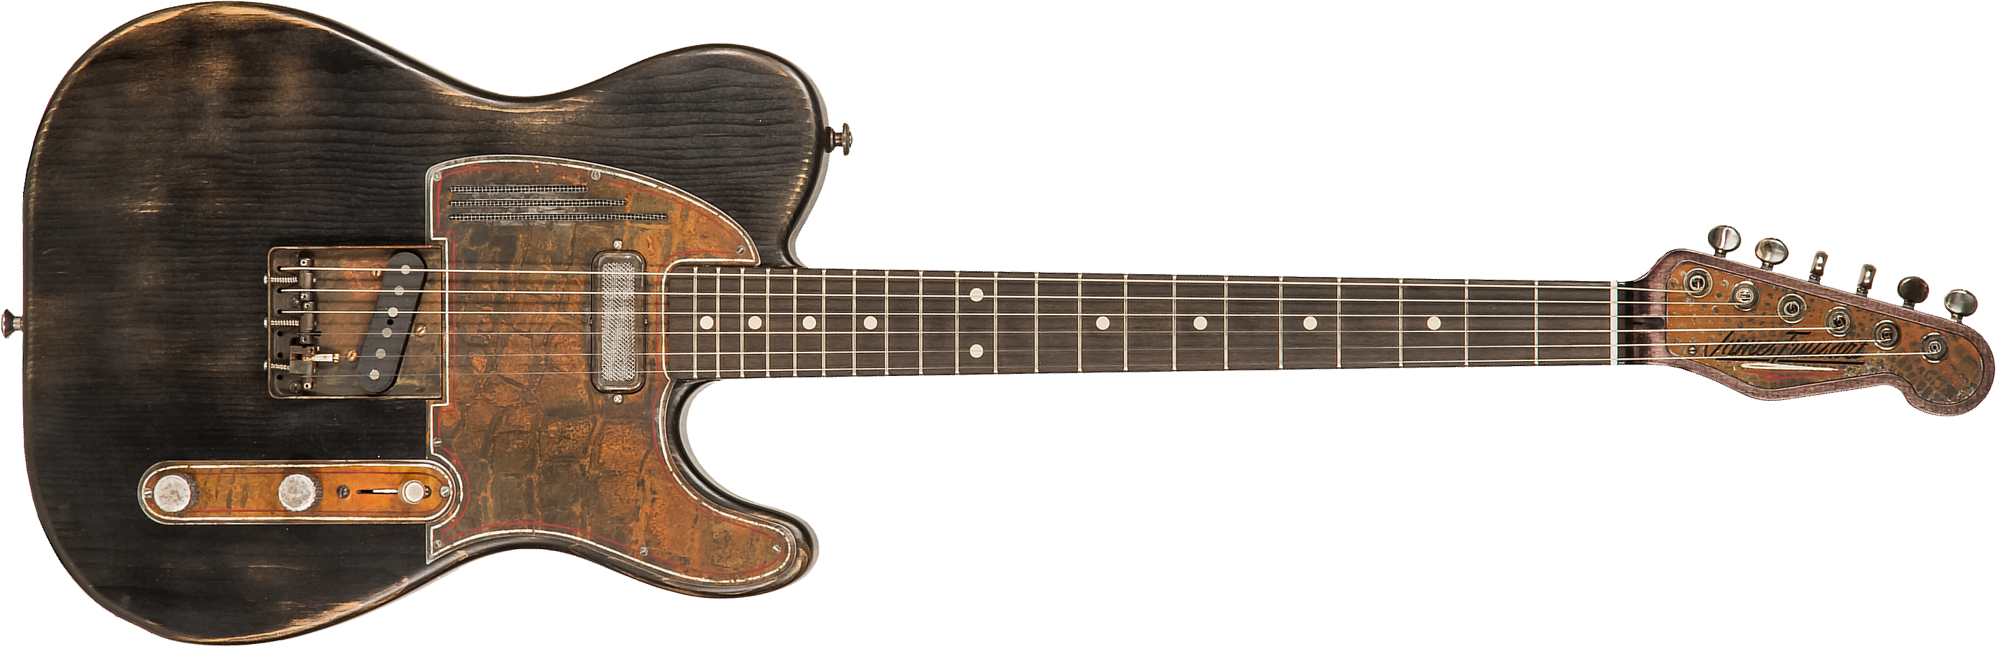 James Trussart Steelguardcaster Glaser B Bender Sh Ht Eb #21062 - Rust O Matic Pinstriped Black Nitro - Guitare Électrique Forme Tel - Main picture